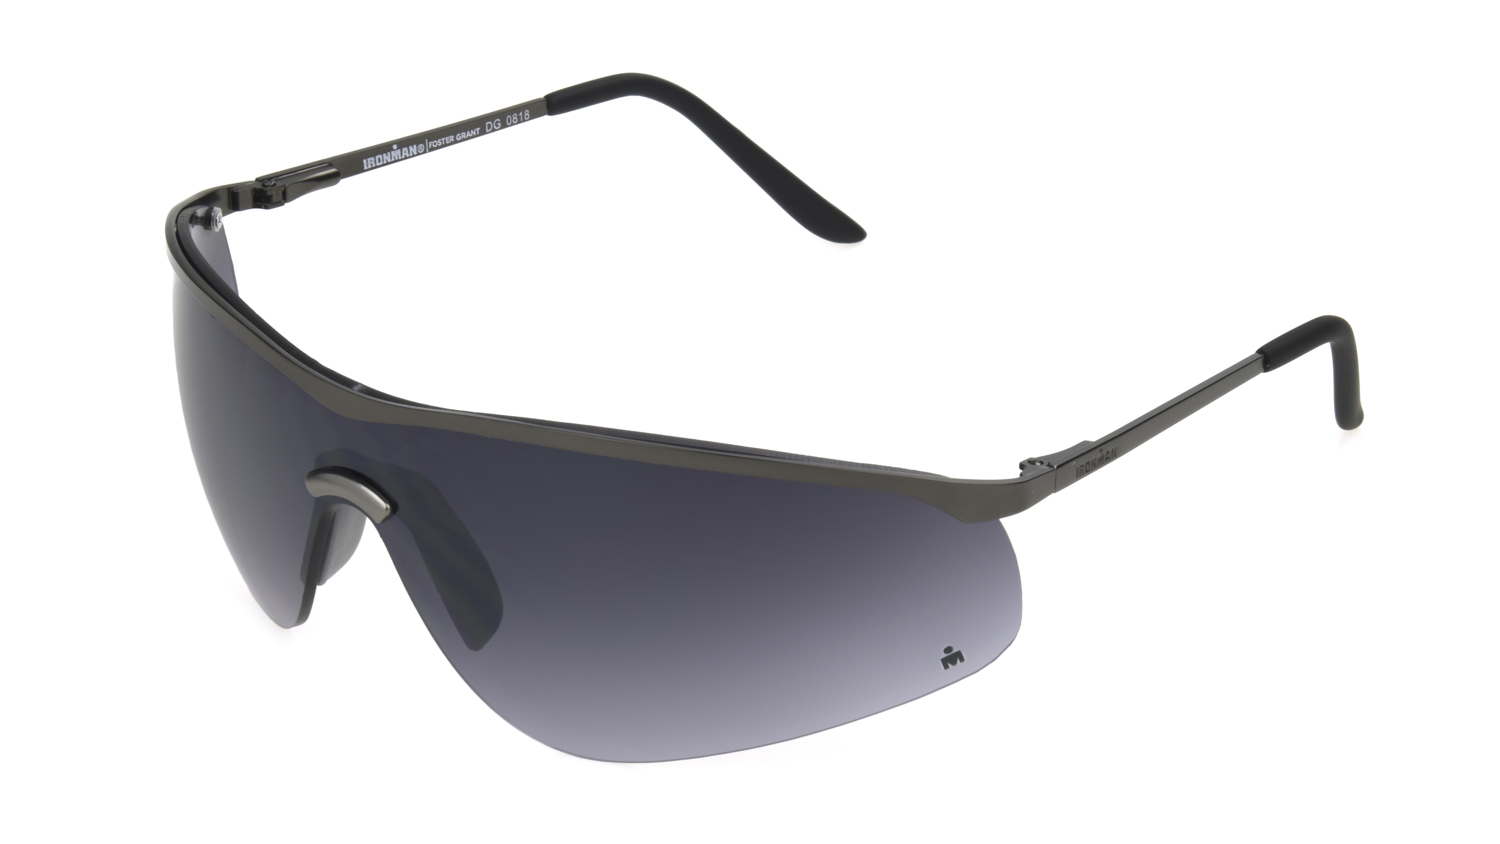 IRONMAN Men's Gunmetal Shield Sunglasses PP02 - image 2 of 3